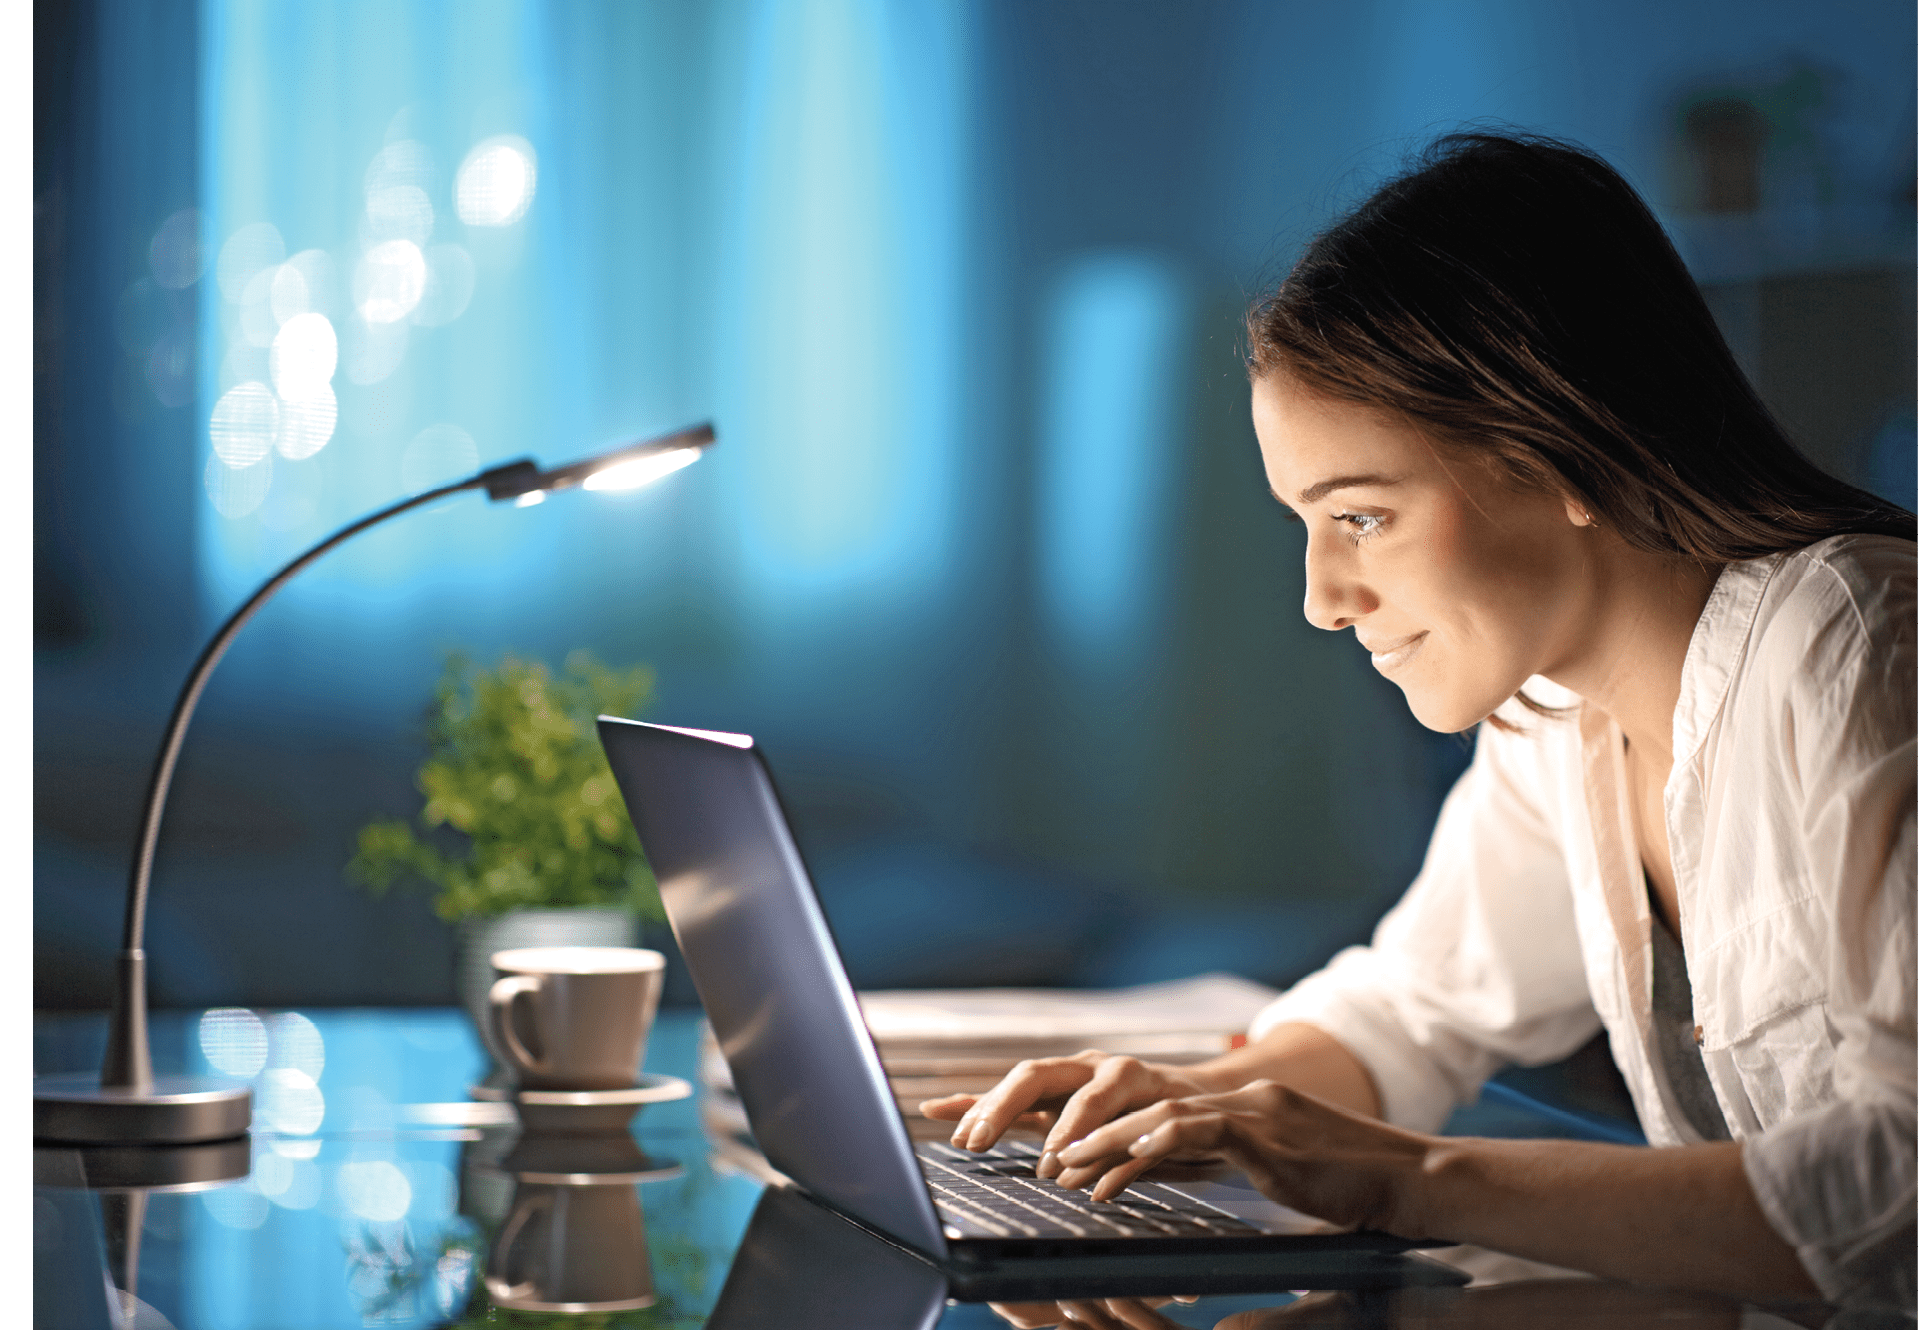 Happy woman writing on laptop keyboard in the night